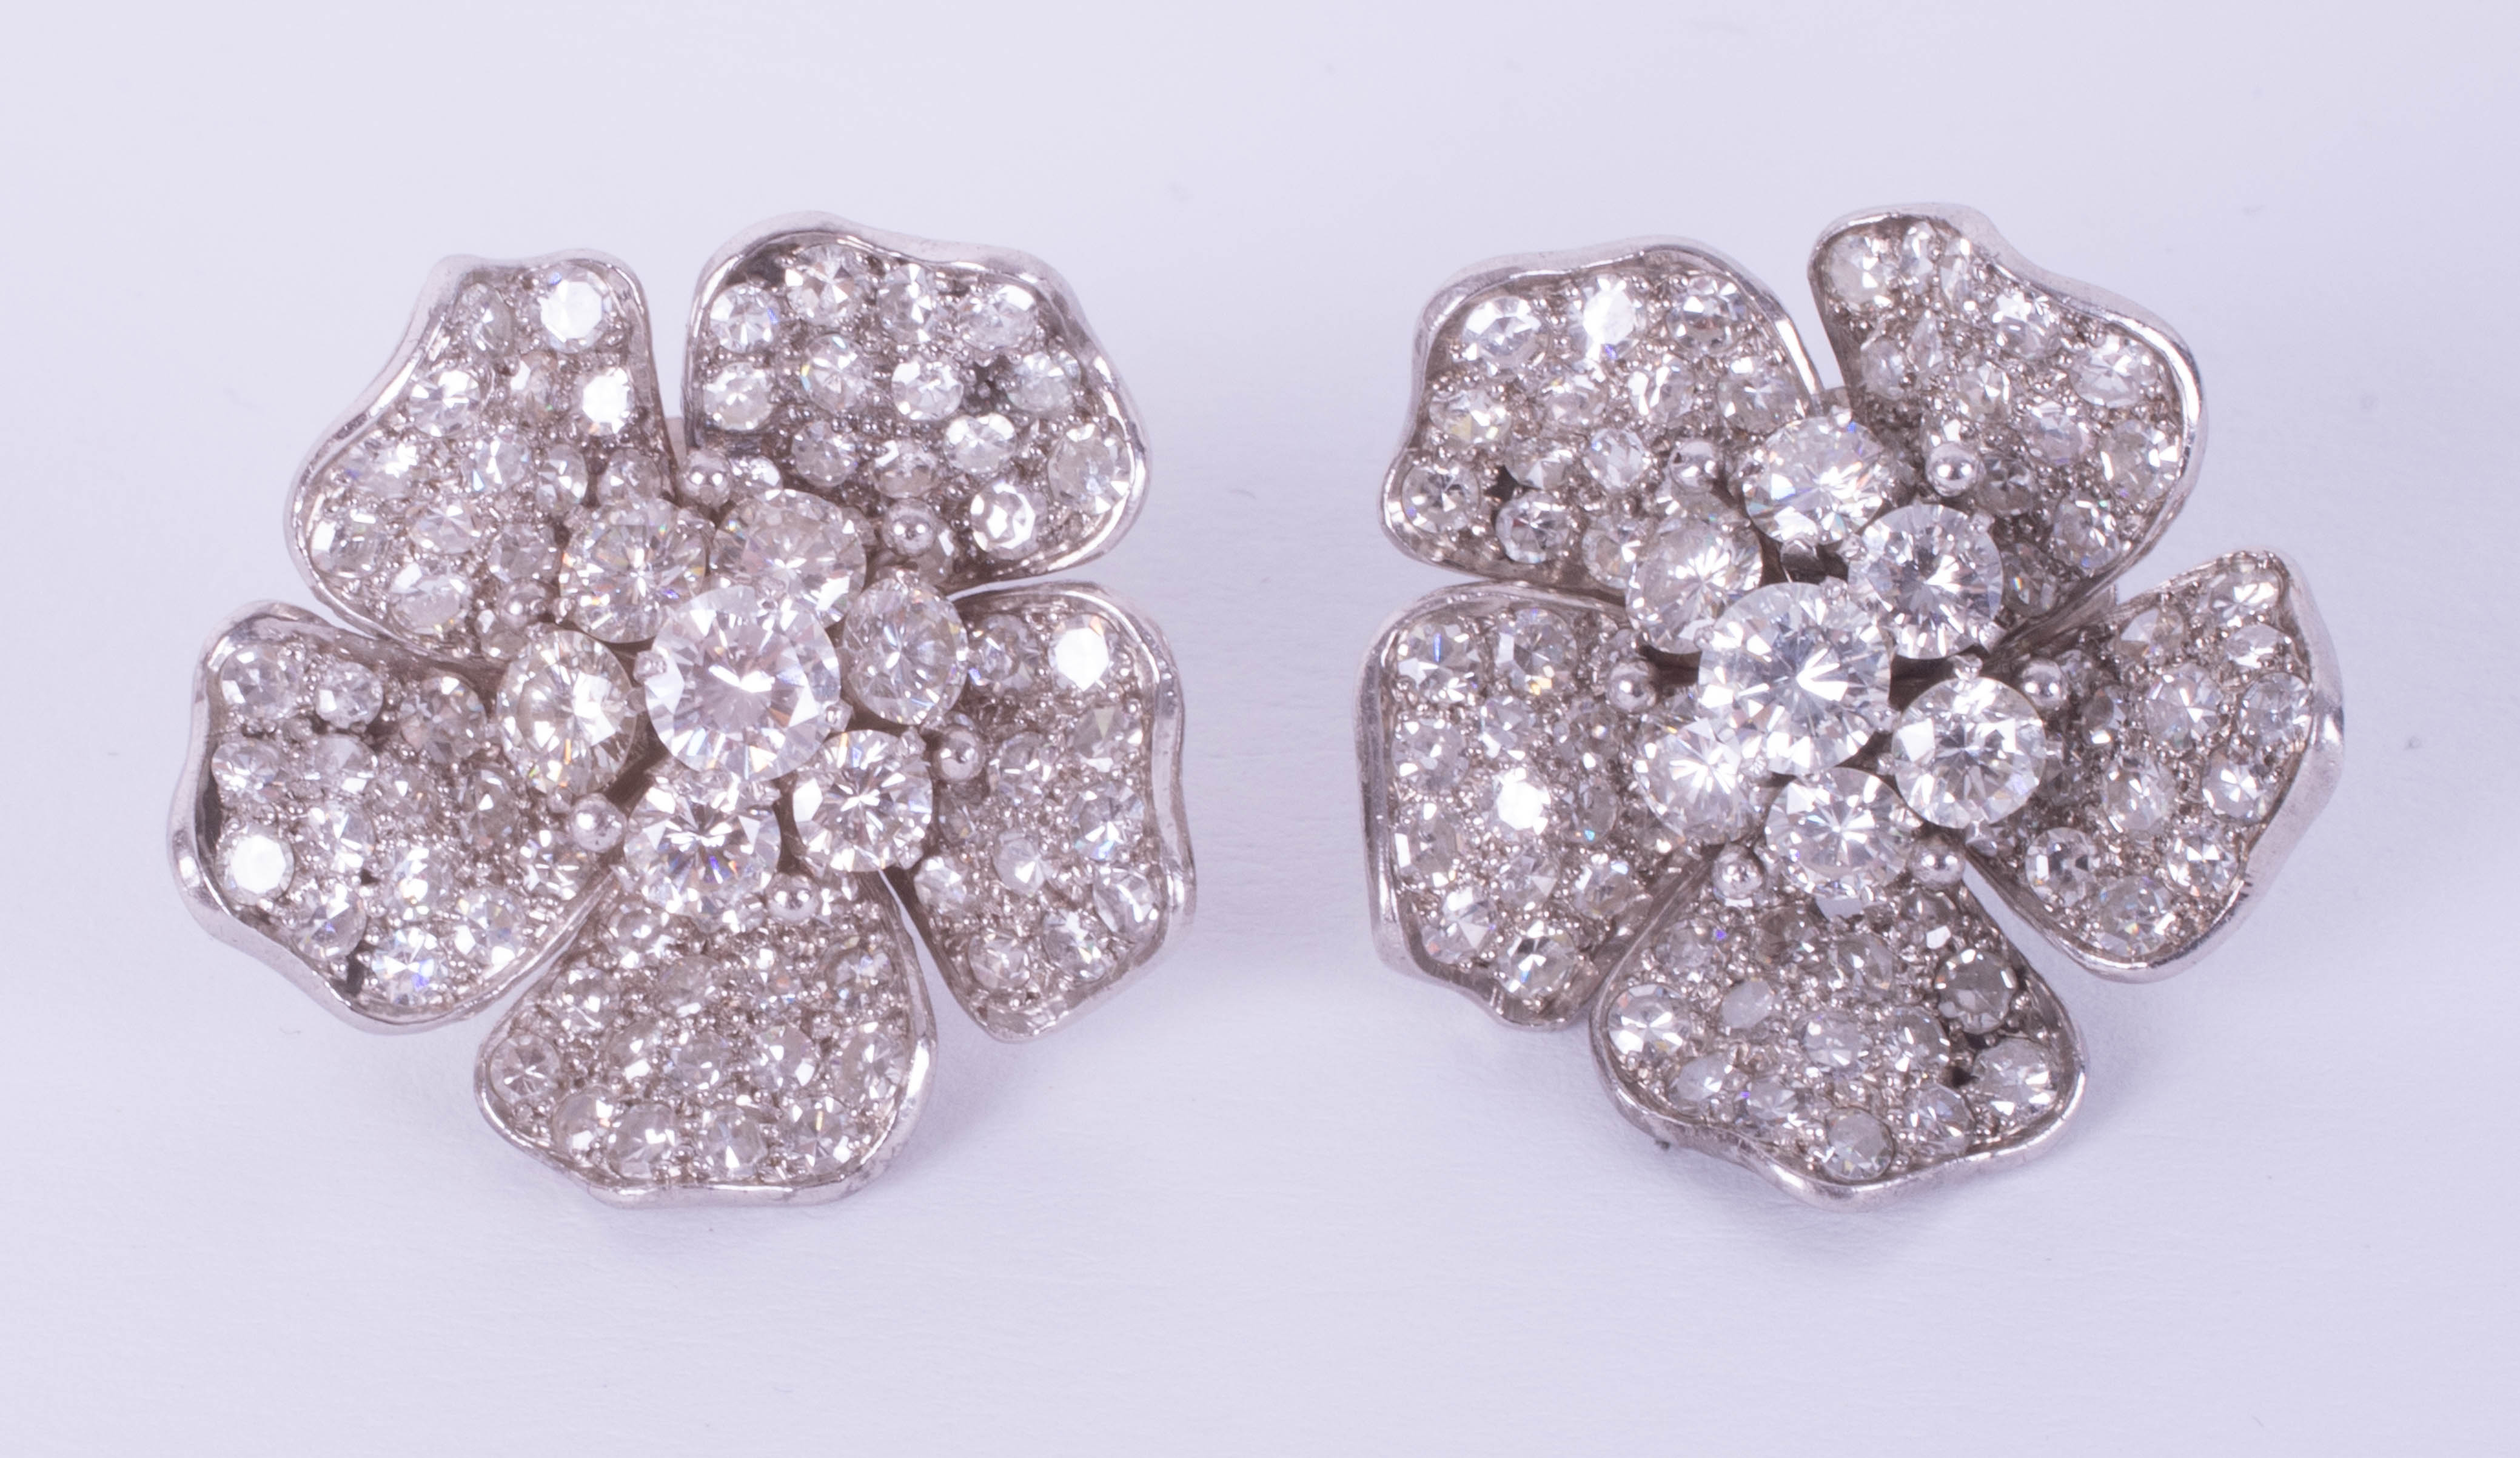 An impressive pair of diamond cluster earrings, each measuring 25mm diameter, set in white metal.